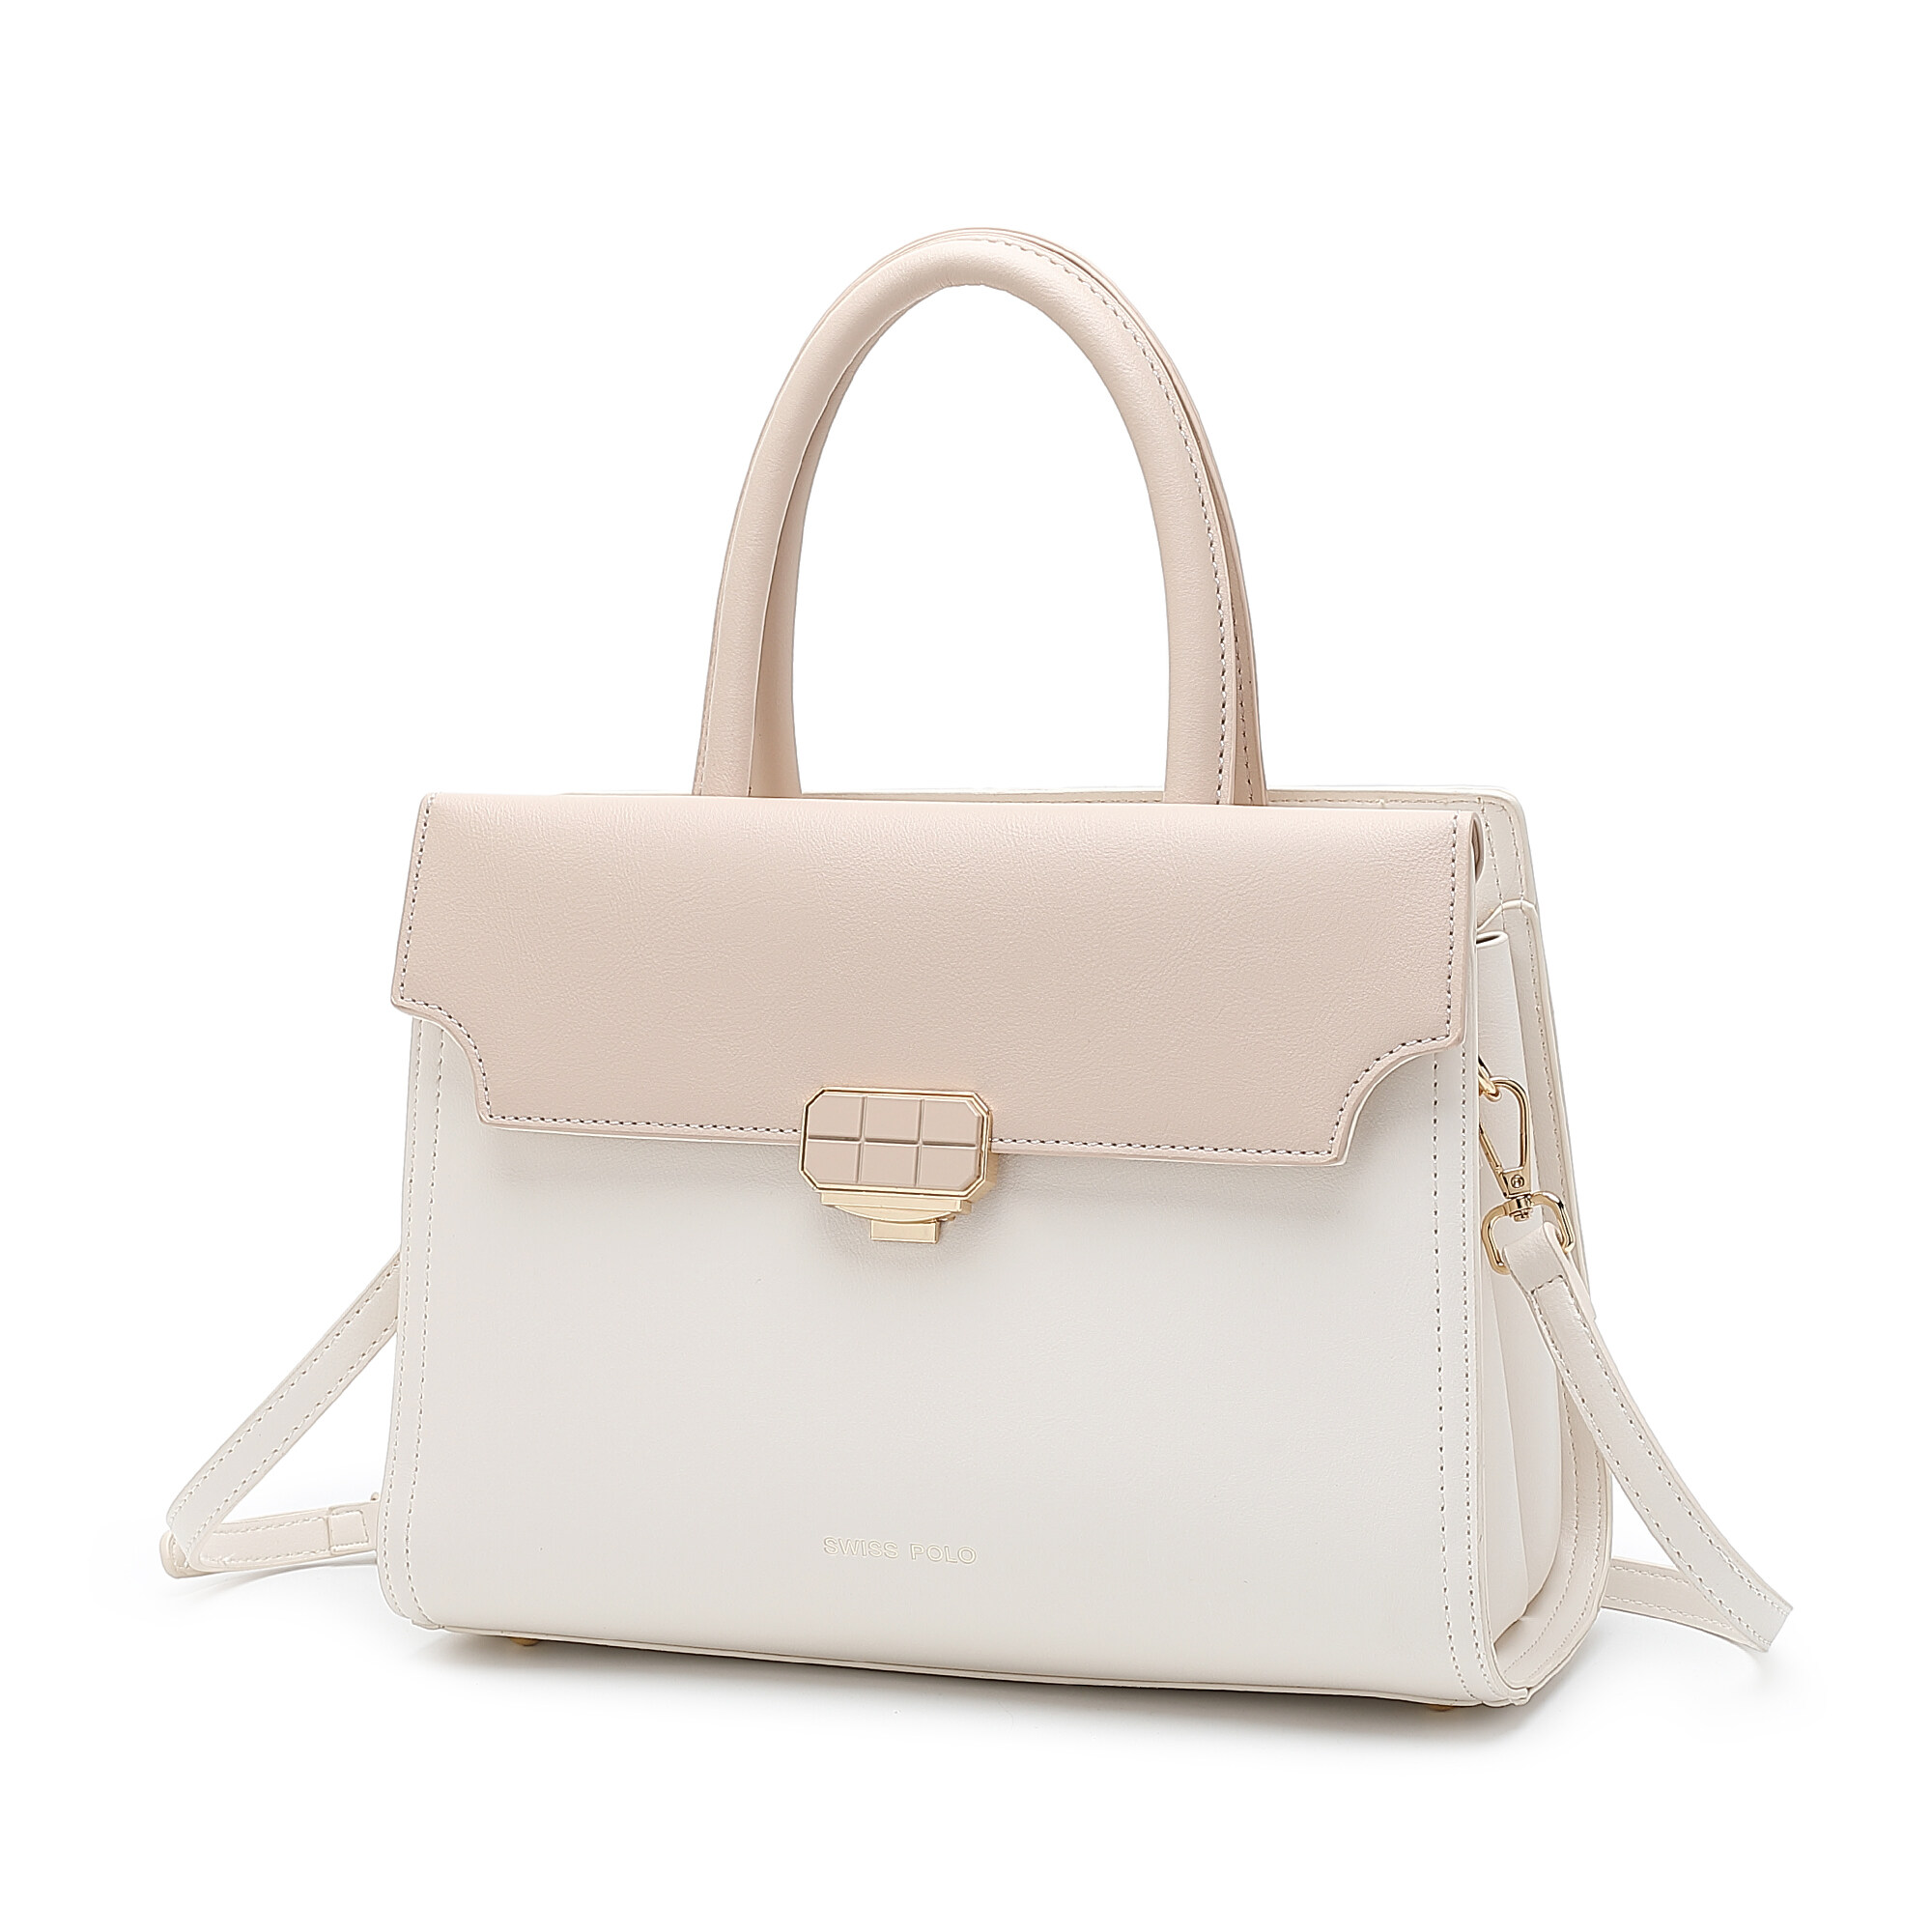 SWISS POLO Ladies Top Handle Sling Bag HKD 3903-4 WHITE